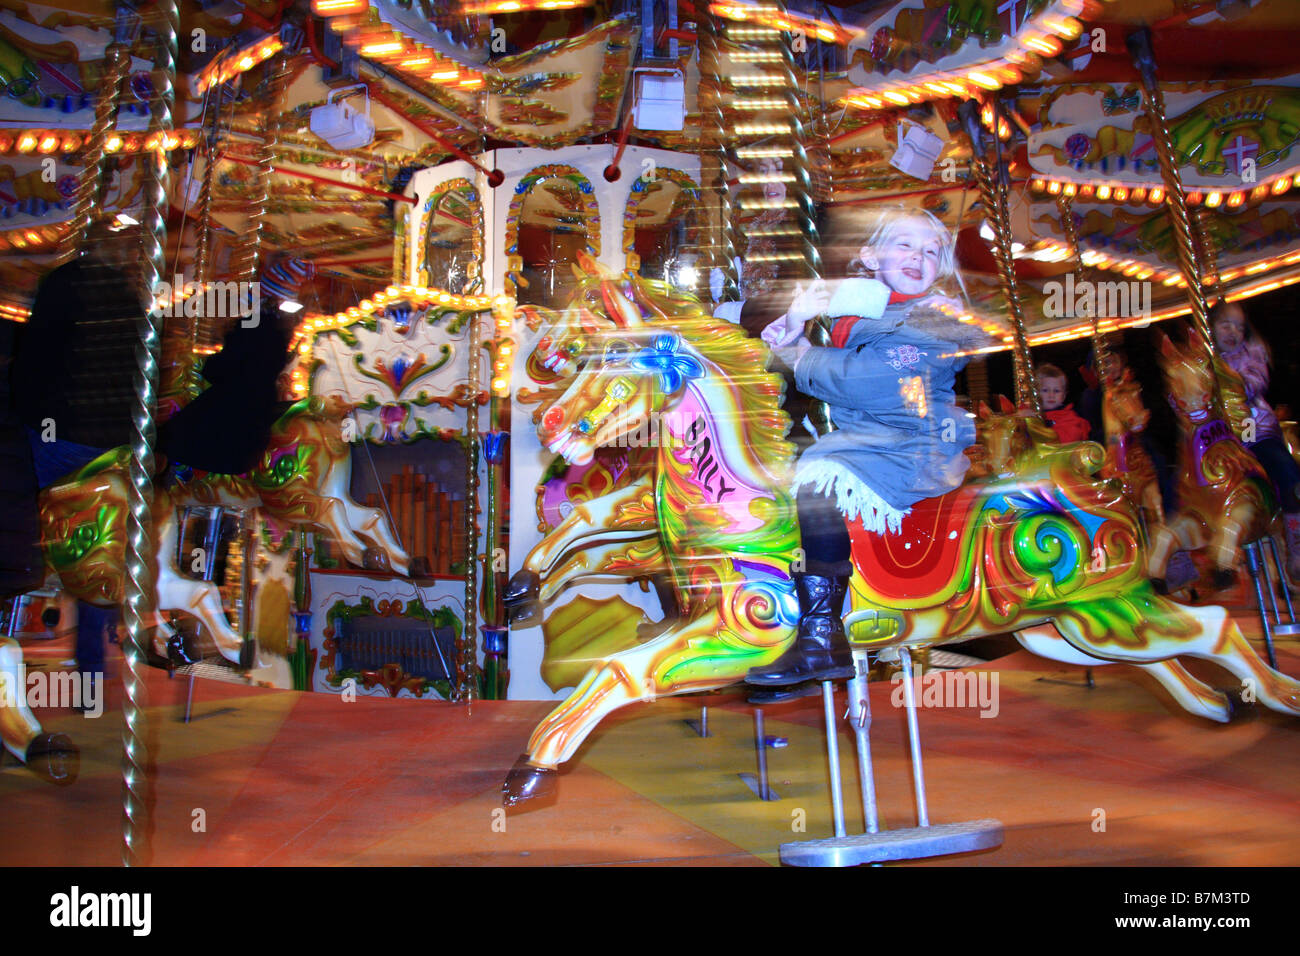 Blurred child riding illuminated traditional merry go round/carousel fairground ride, Winter Wonderland, Hyde Park, London, UK Stock Photo